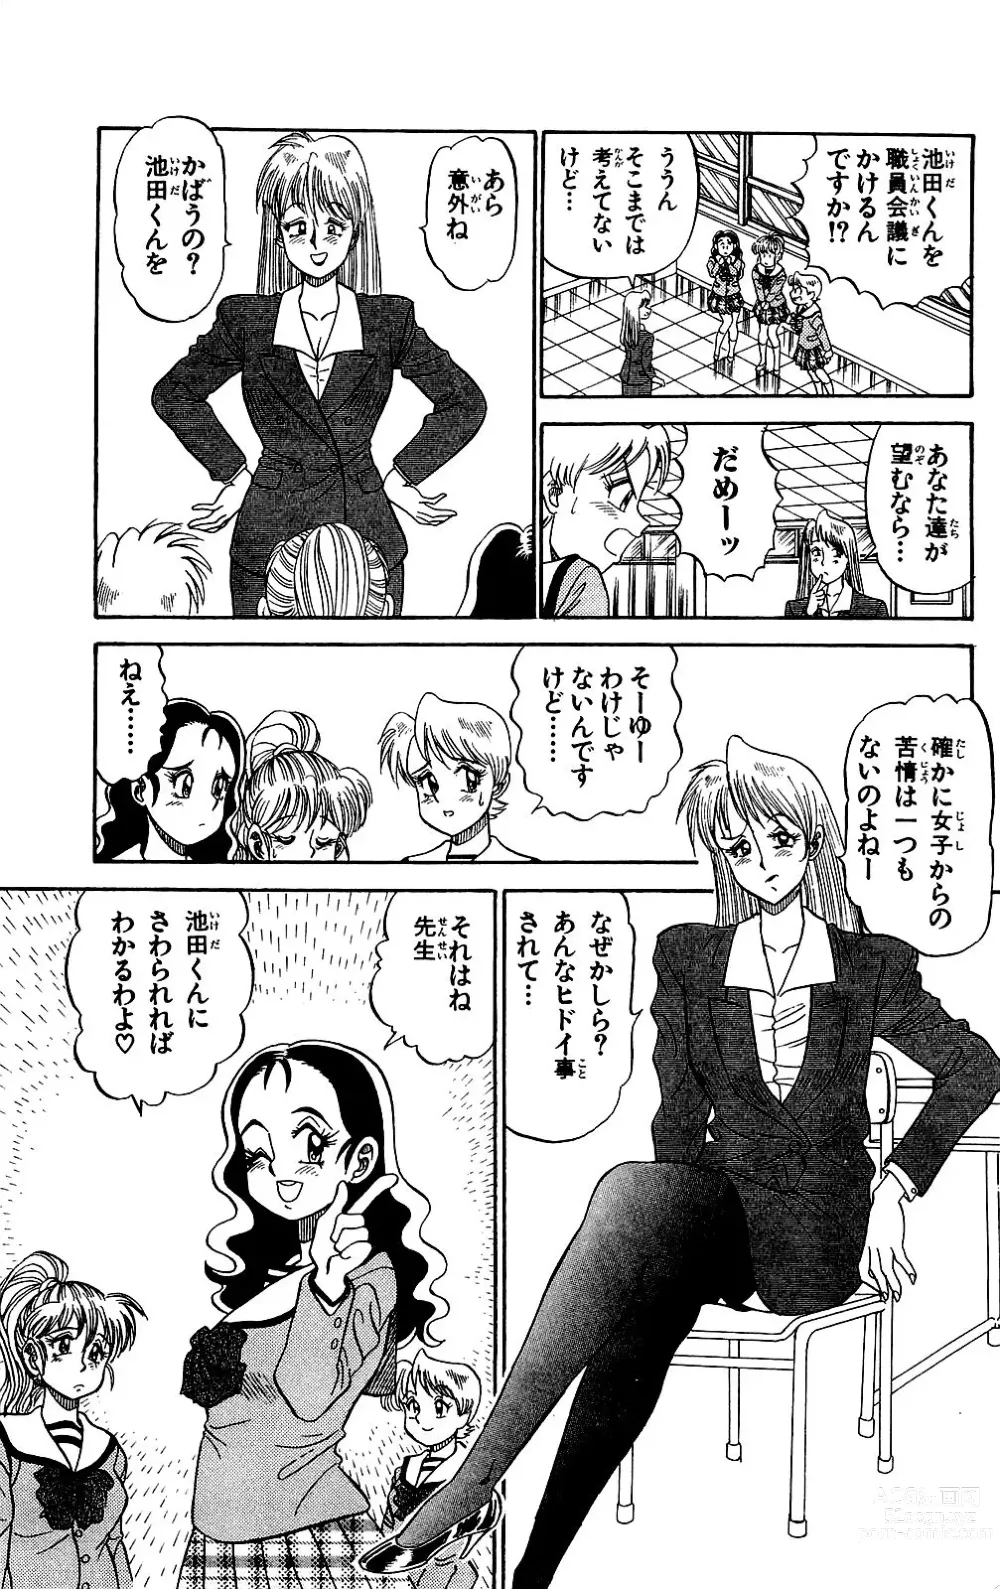 Page 17 of manga Orette Piyoritan Vol. 1